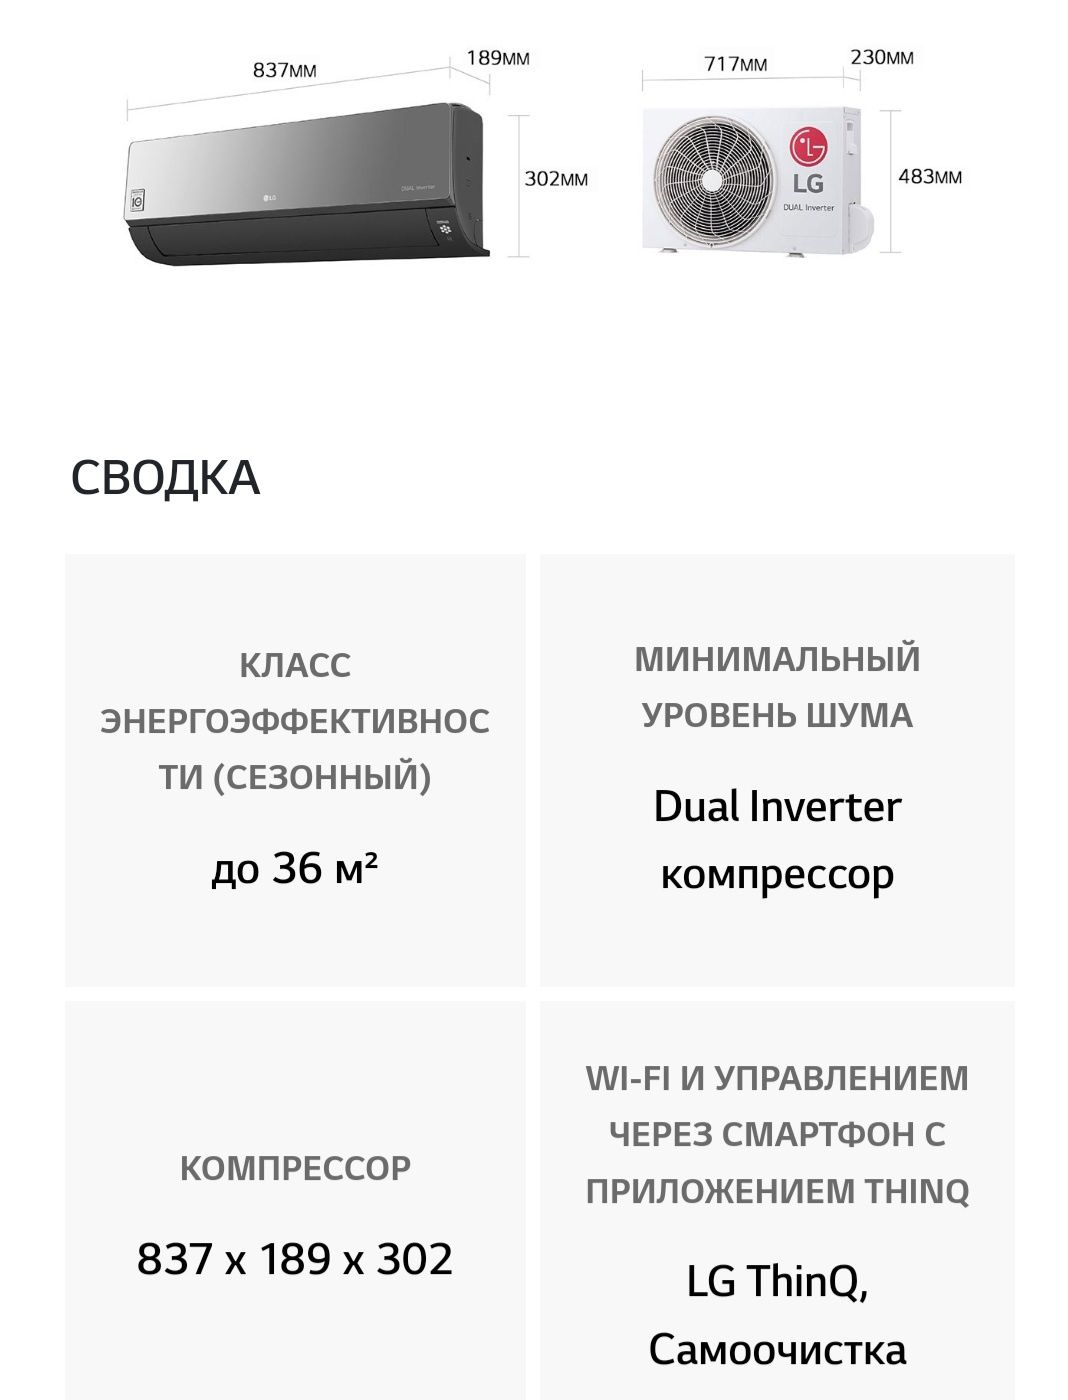 LG ARTCOOL Mirror, кондиционер DUAL Inverter, до 36 м²,